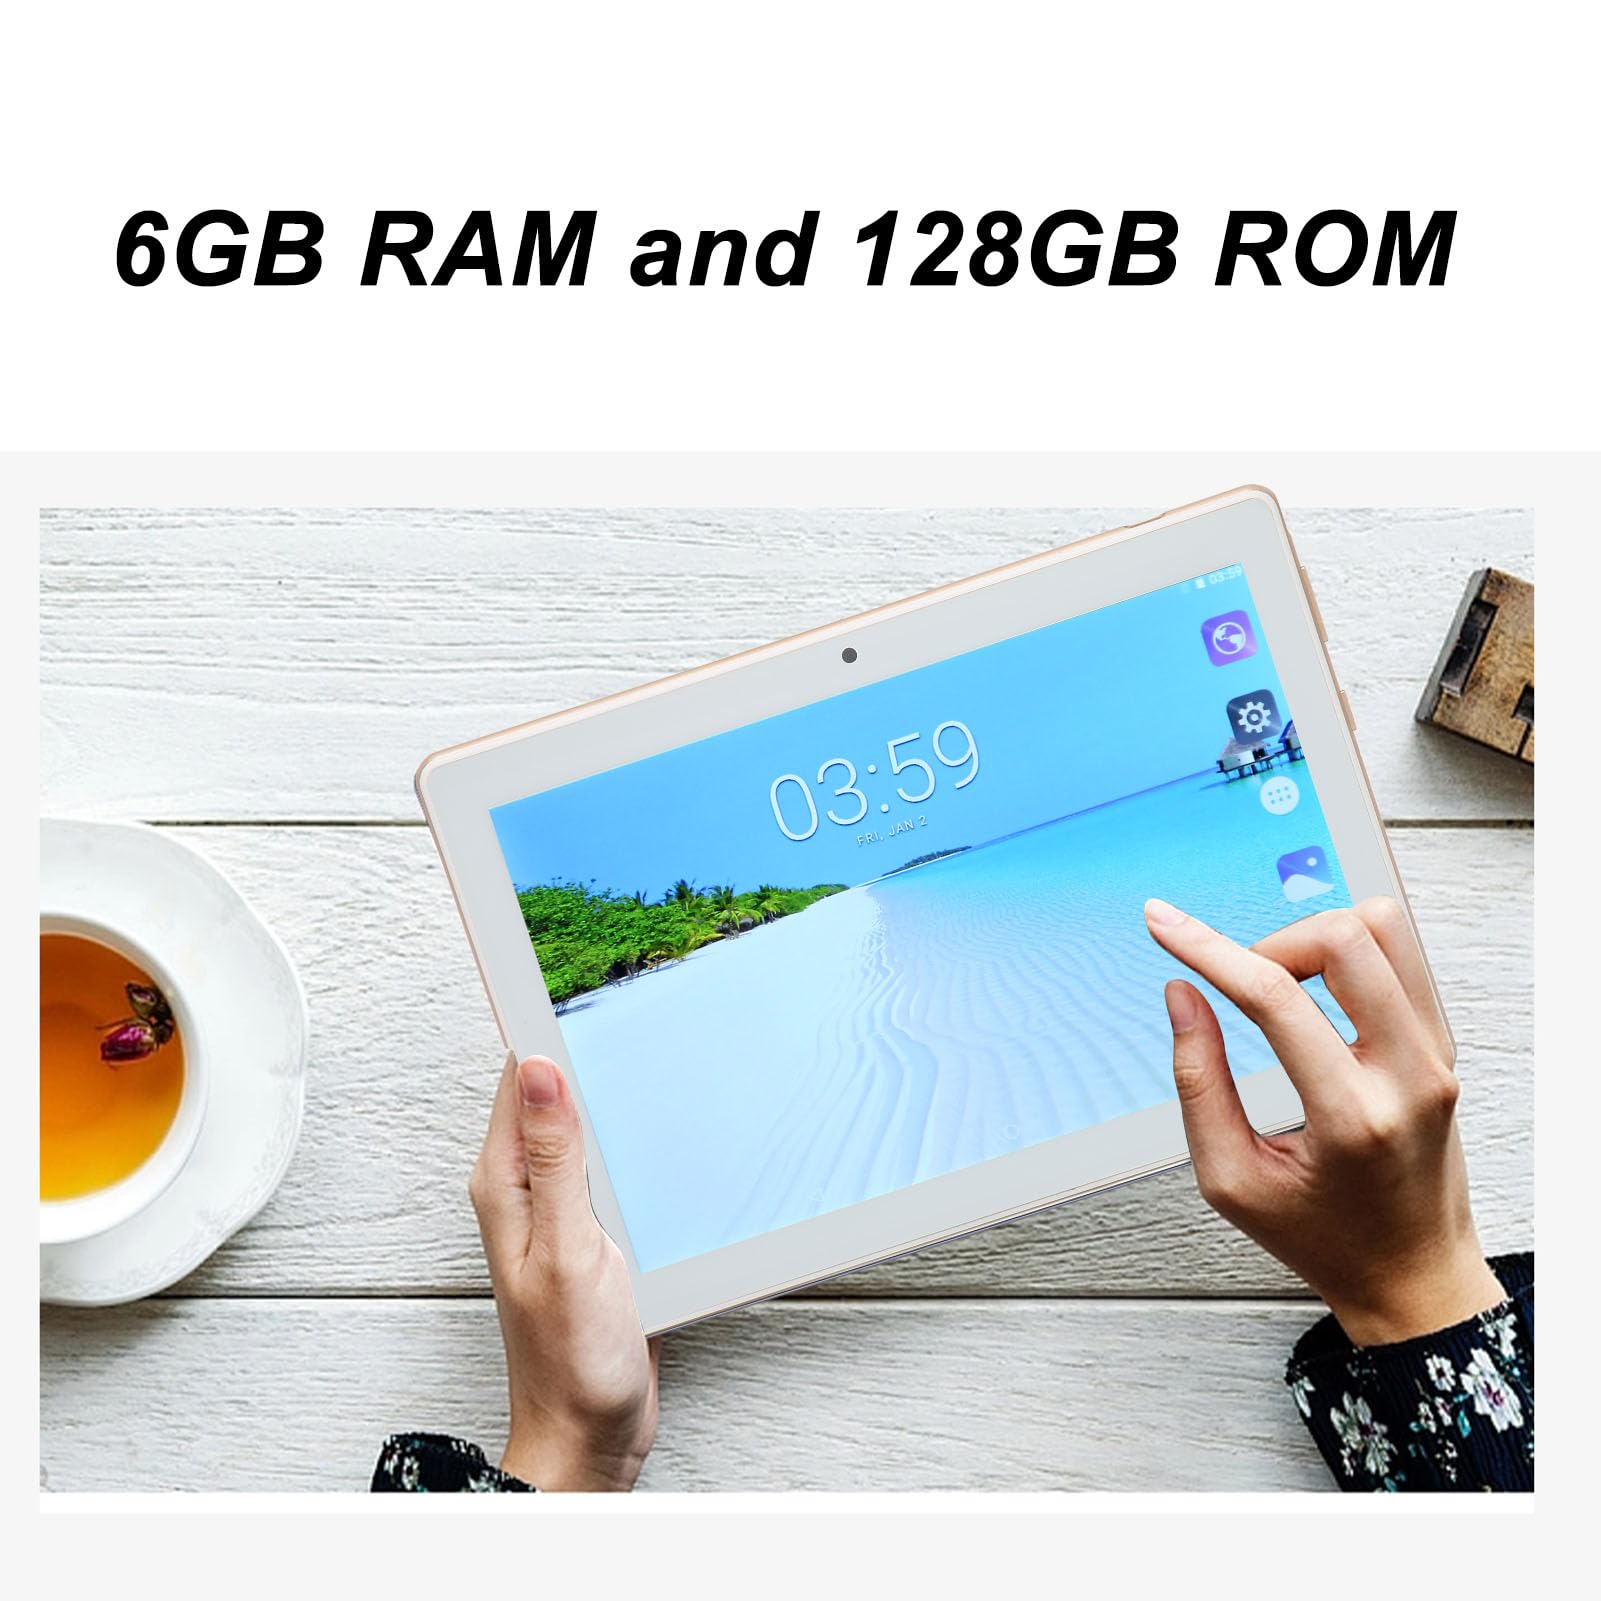 ciciglow 8 Inch FHD Tablet, 6GB RAM 128GB ROM Small Tablet, Octa Core Processor, 5MP+8MP Camera, 6000mAh Fast Charging, Dual Card Dual Standby, 5G WiFi, GPS (Gold)